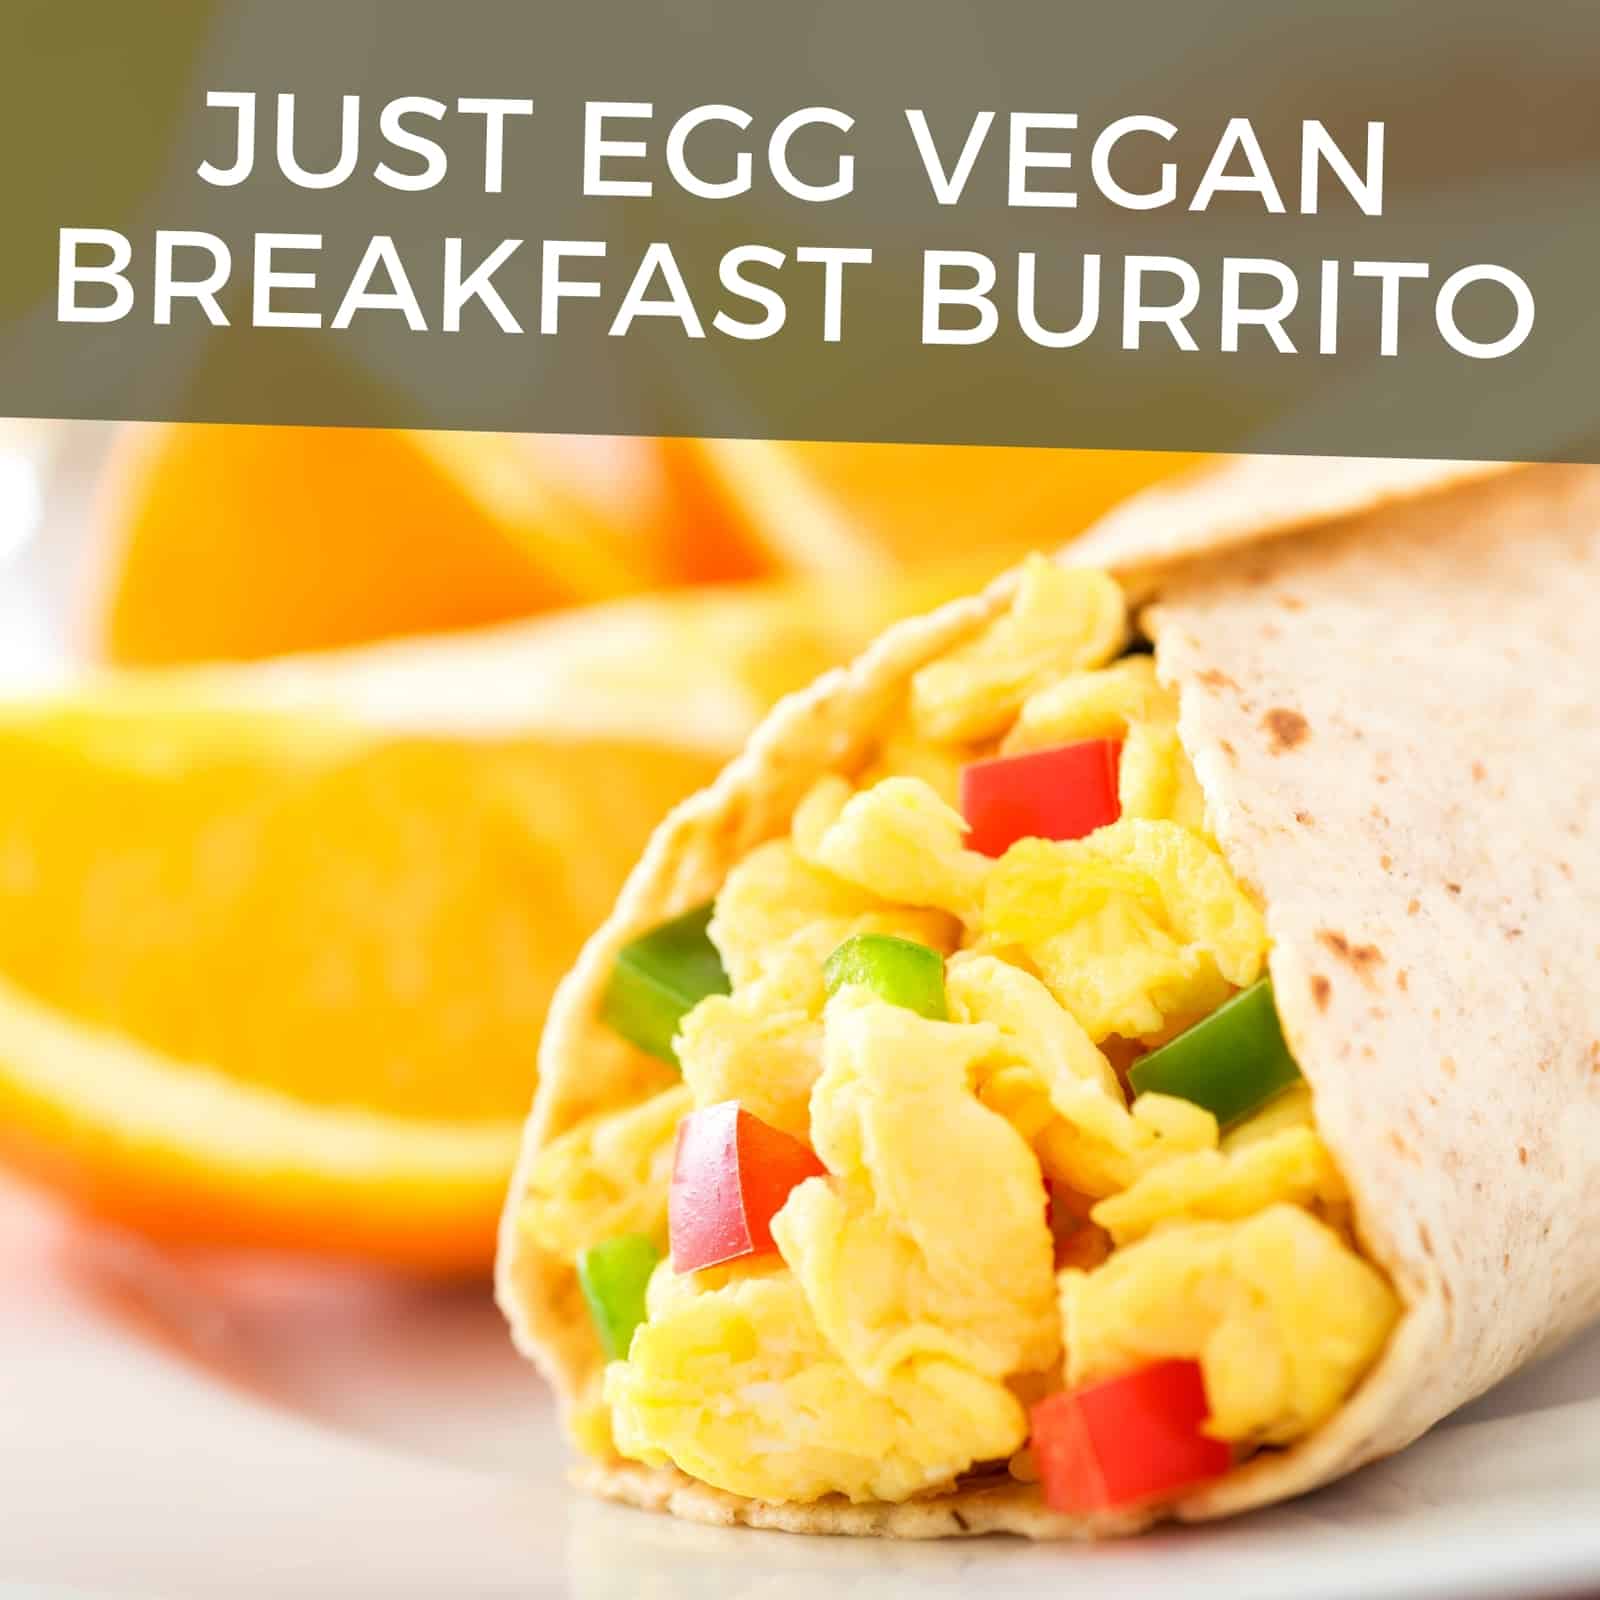 Just egg vegan breakfast burrito